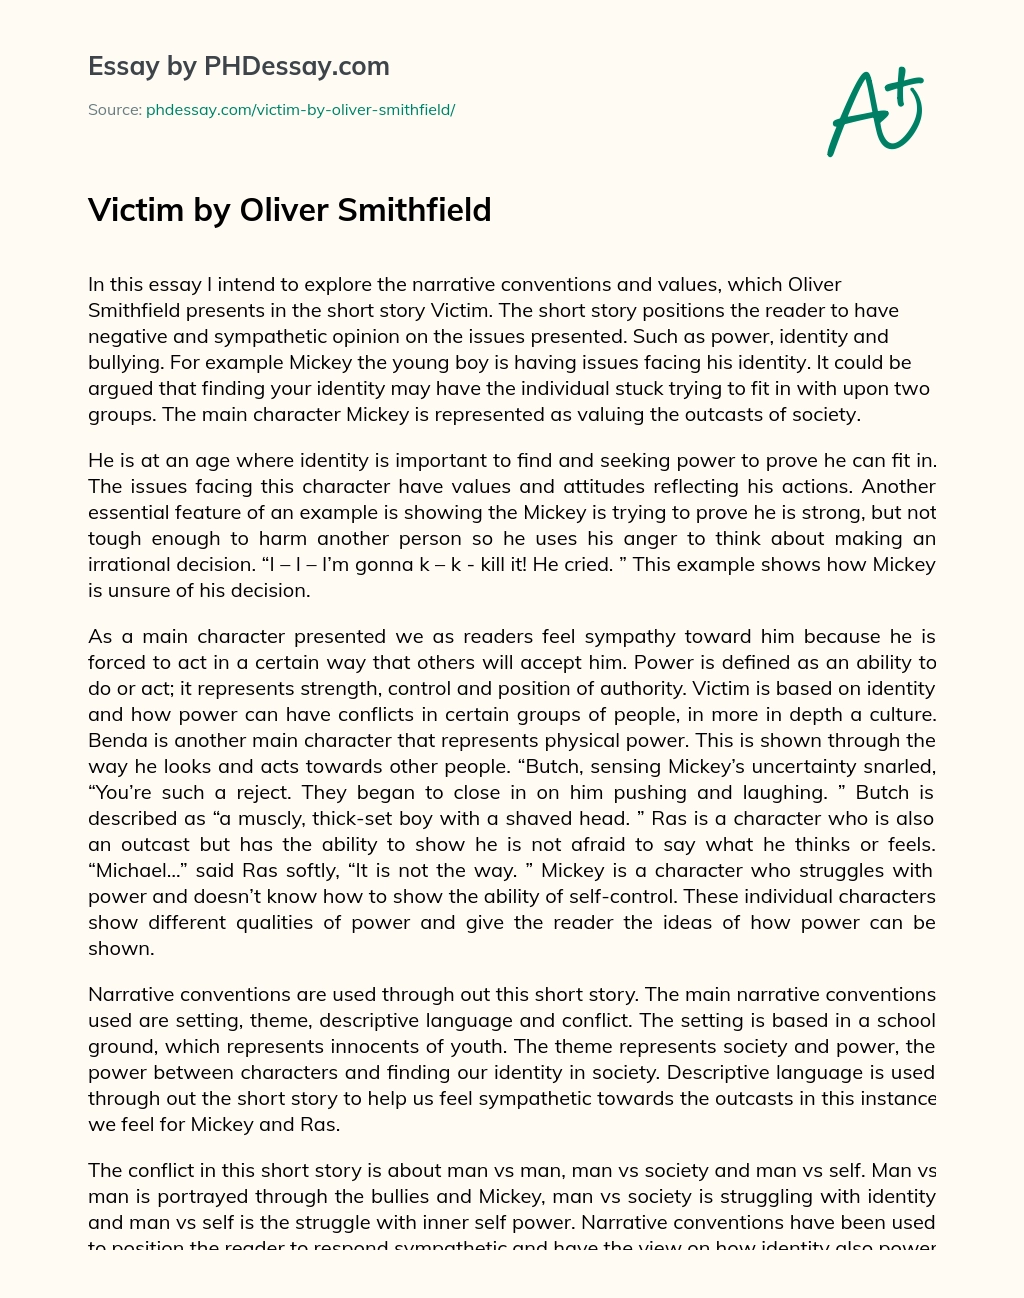 Victim by Oliver Smithfield essay